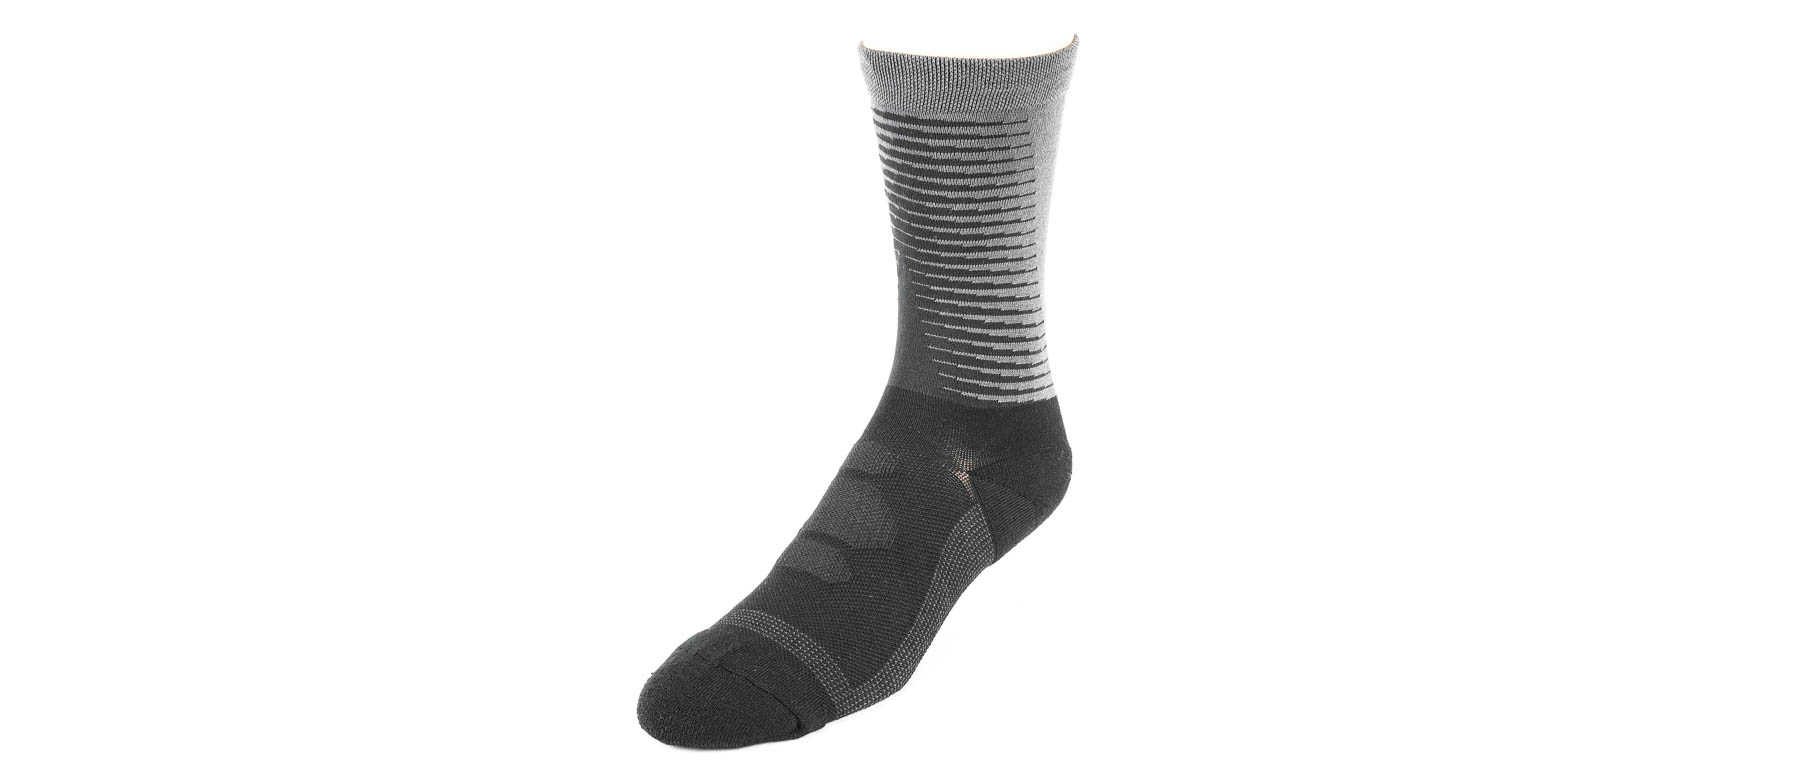 Shimano S-Phyre Merino Tall Socks